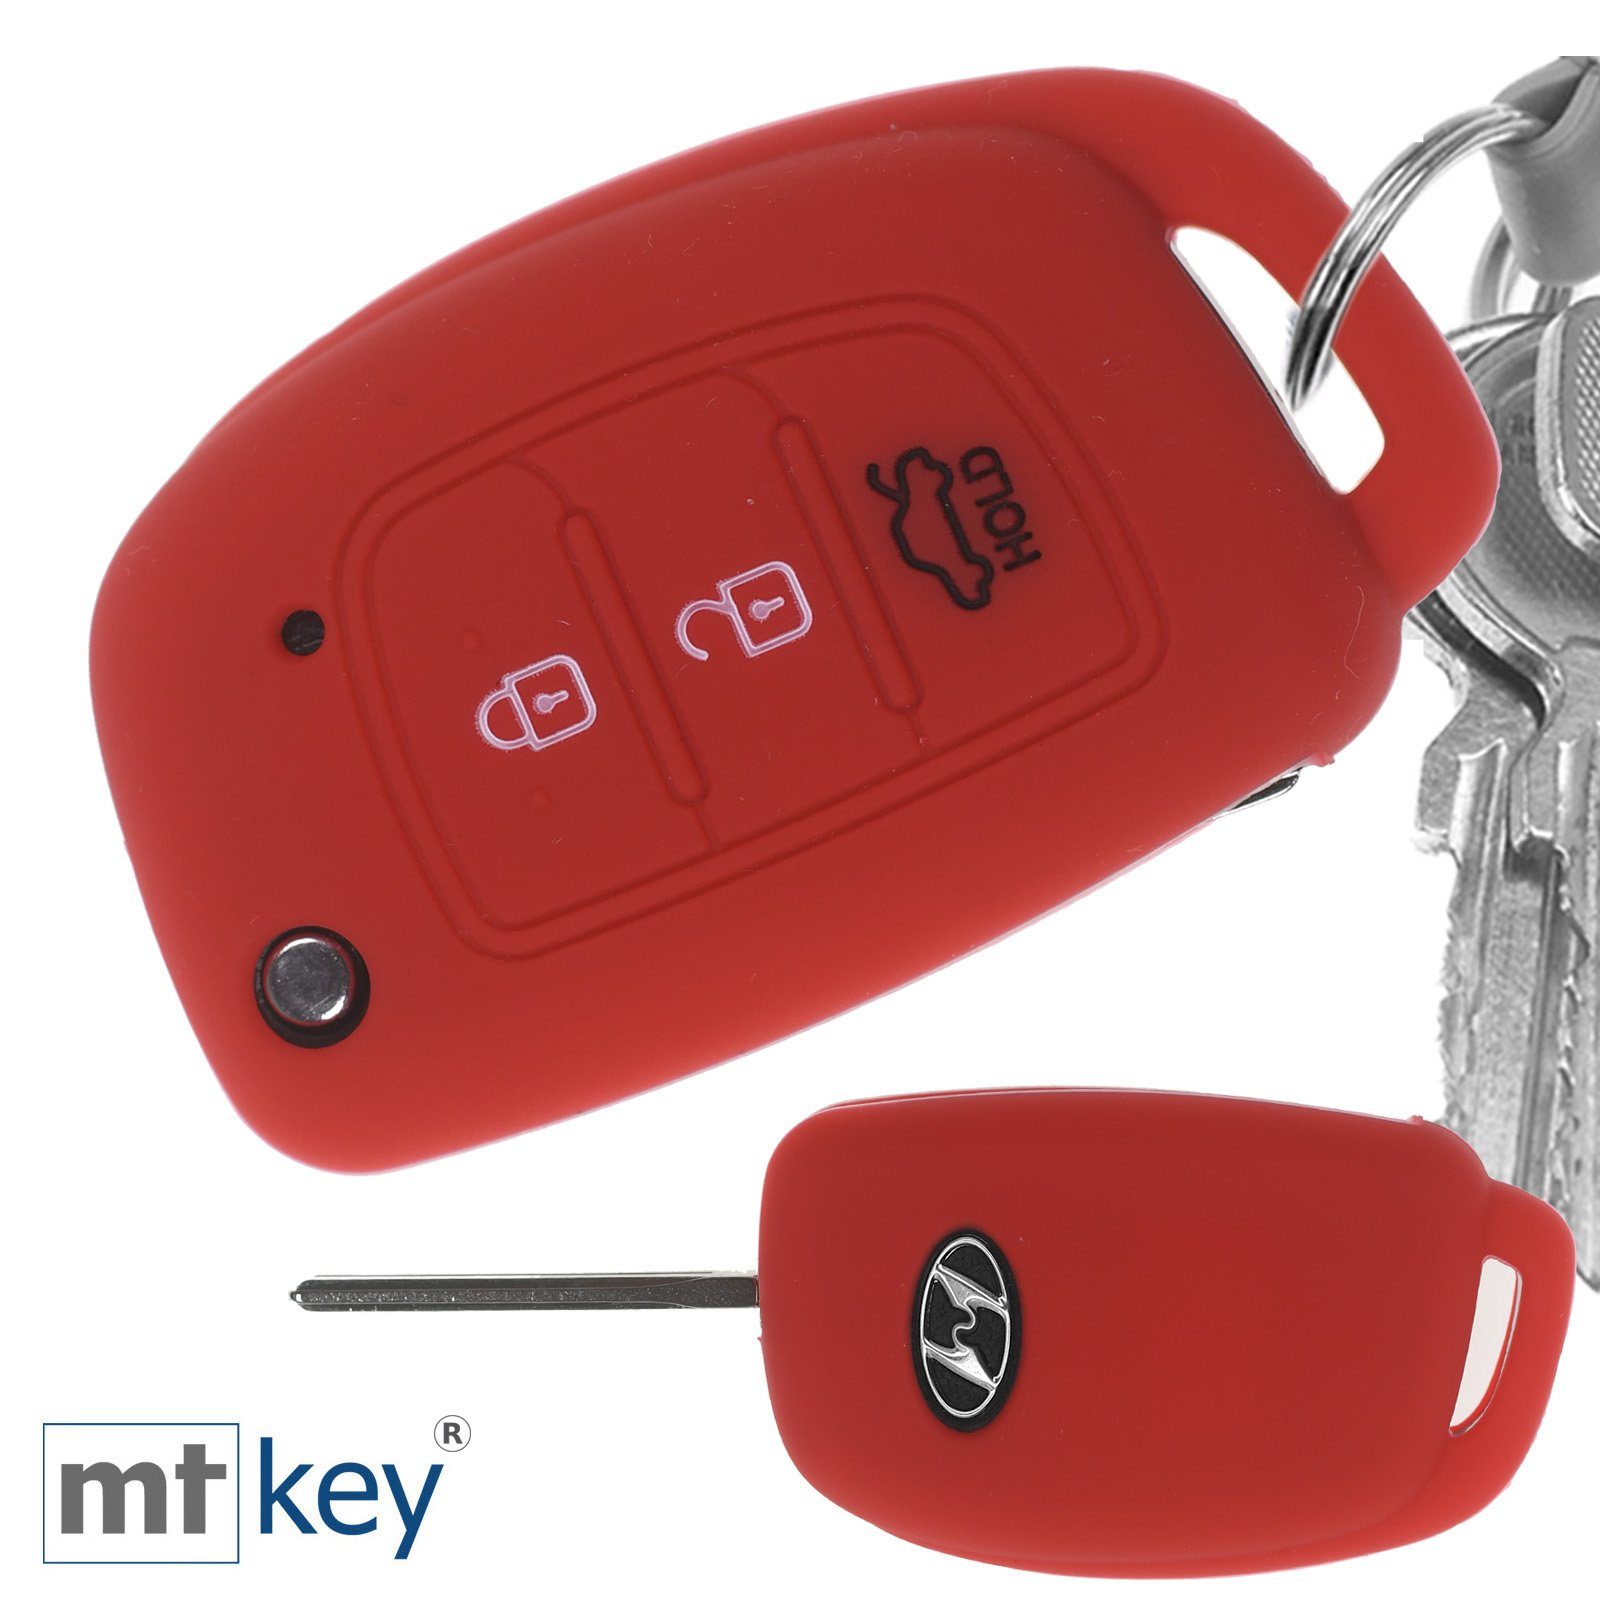 mt-key Schlüsseltasche Autoschlüssel Softcase Silikon Schutzhülle im Wabe Design Rot, für Hyundai i10 i20 ix25 ix35 i40 Accent Tucson 3 Knopf Klappschlüssel